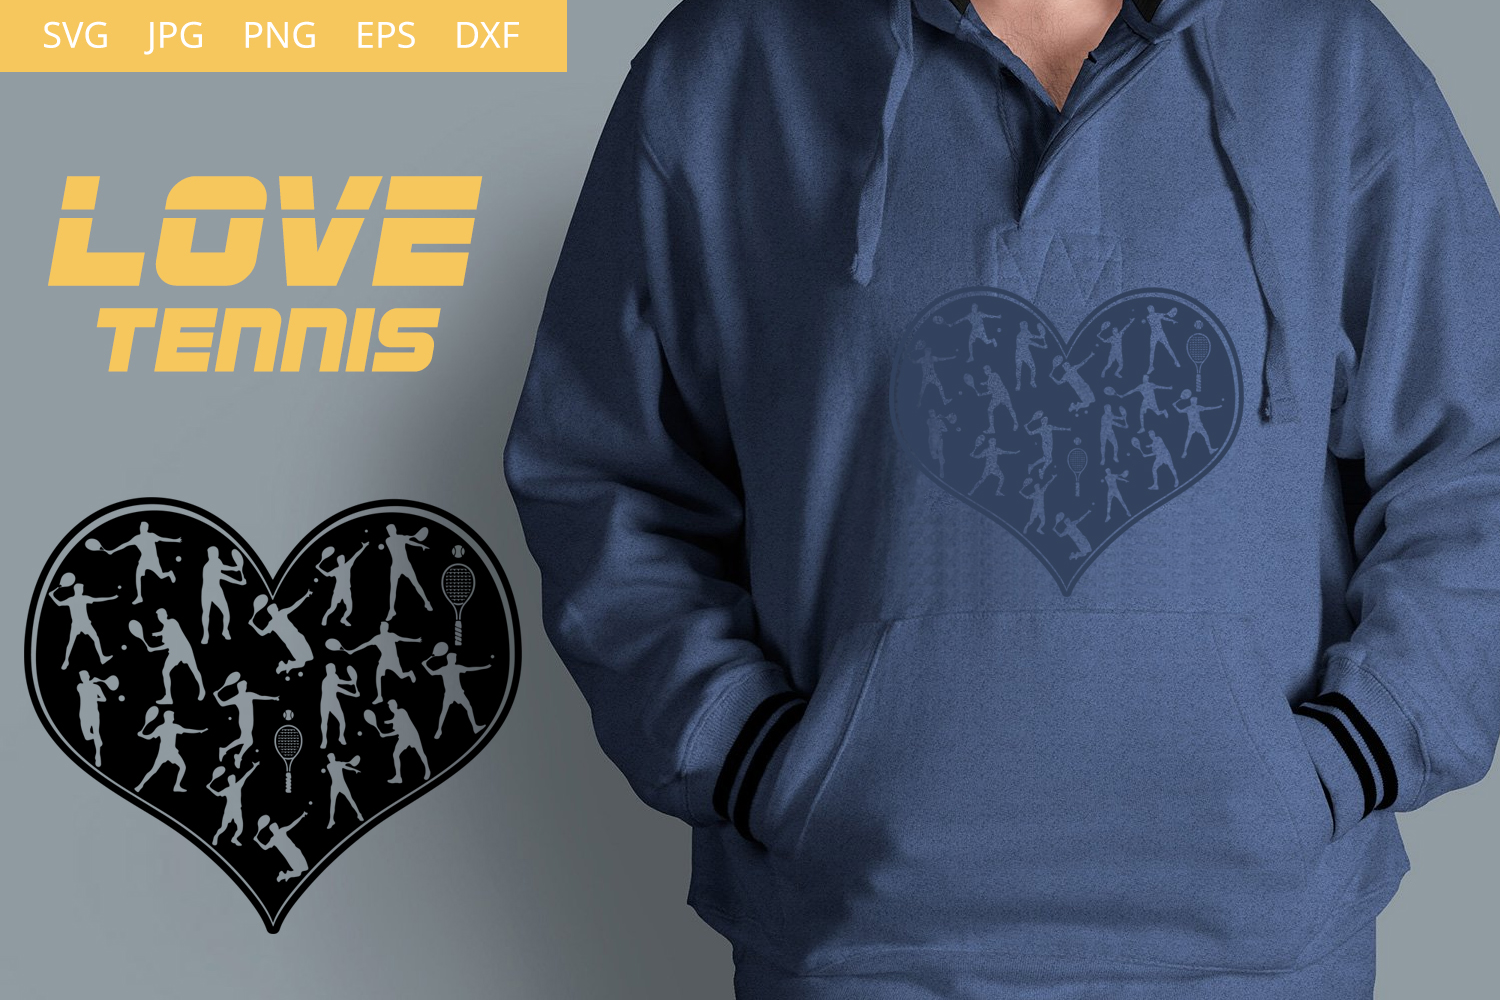 Download Love Tennis - Men SVG Vector (359909) | Illustrations ...